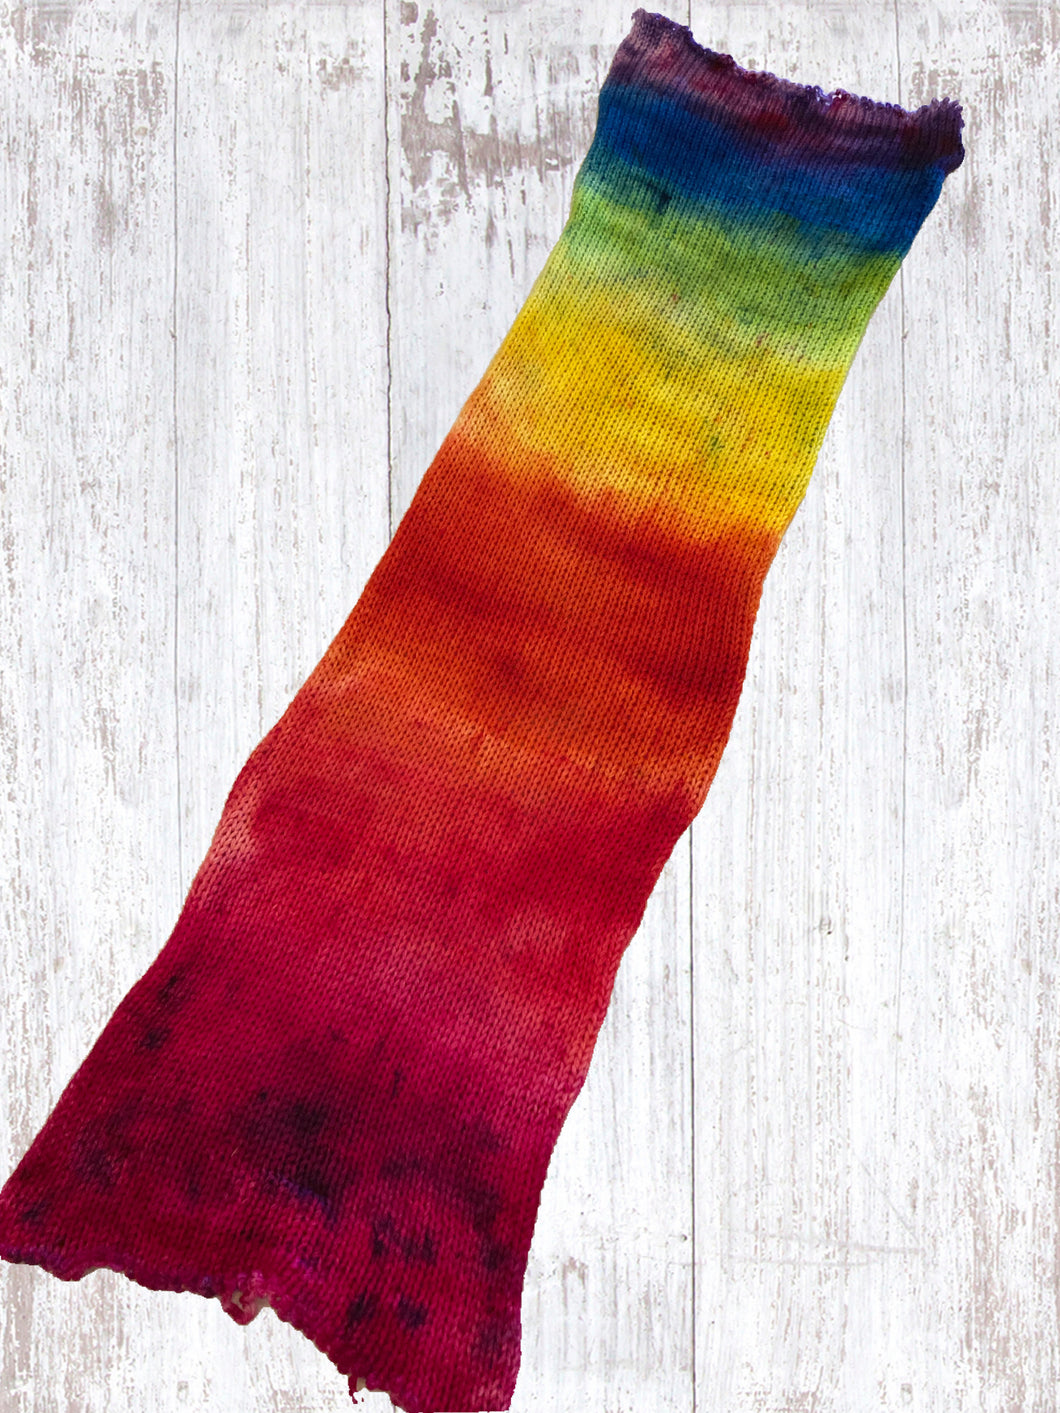 Roy G. Biv - Hand Painted Artisan Sock Blank